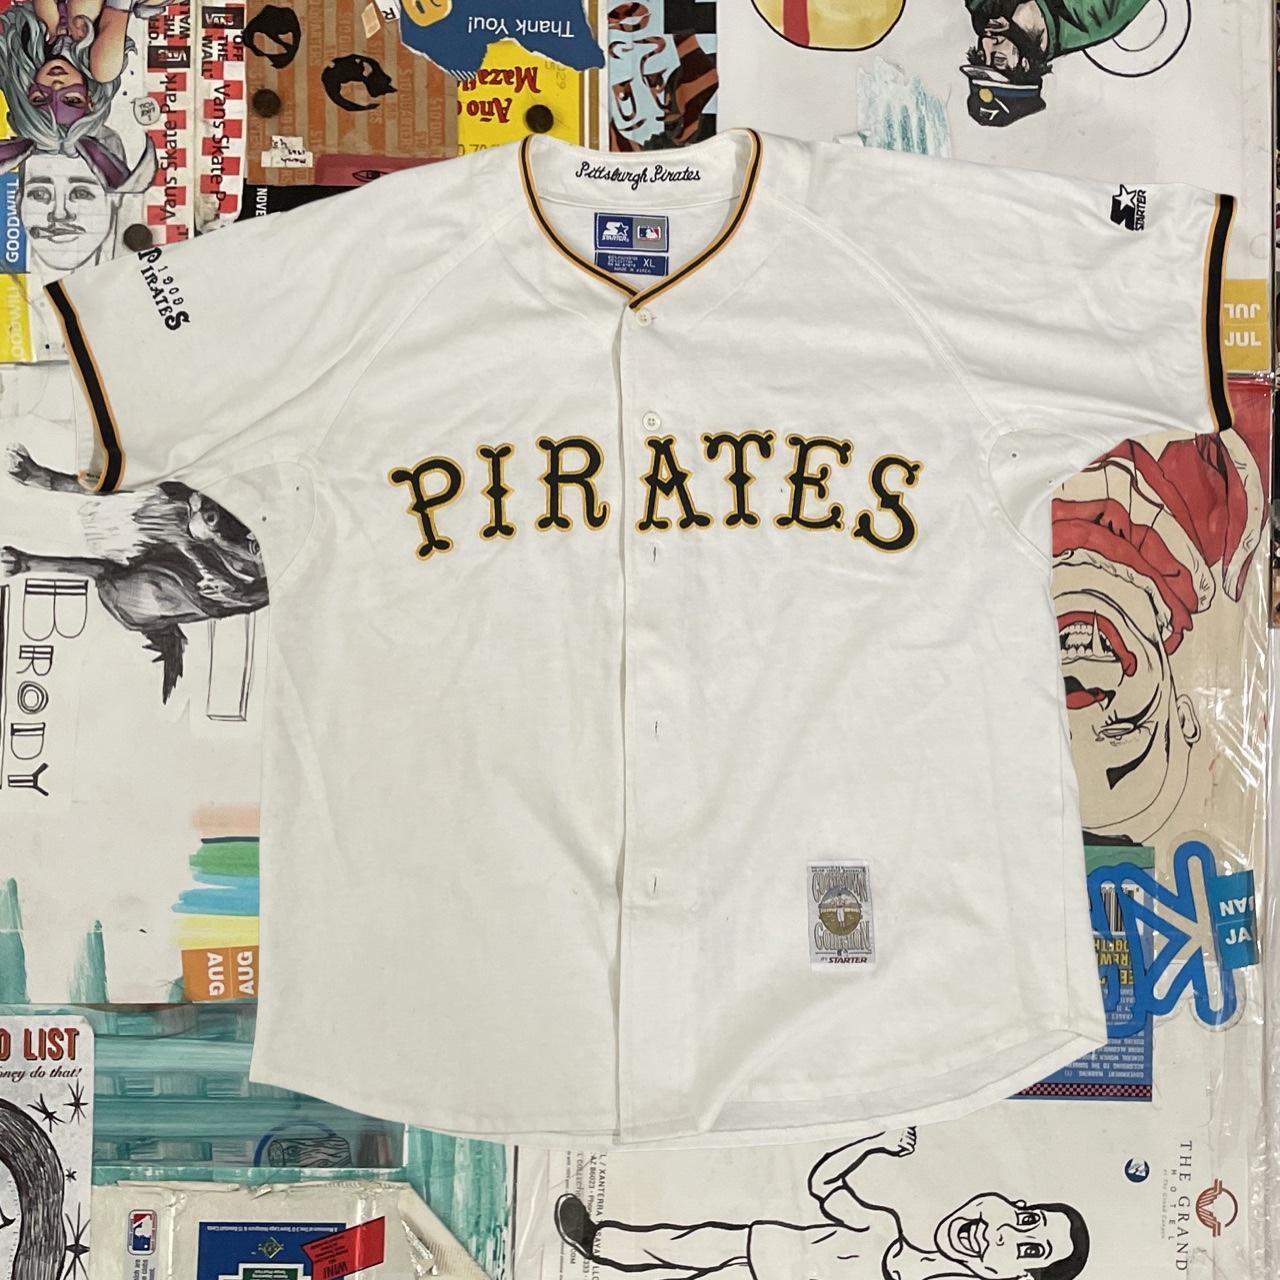 pittsburgh pirates retro jersey